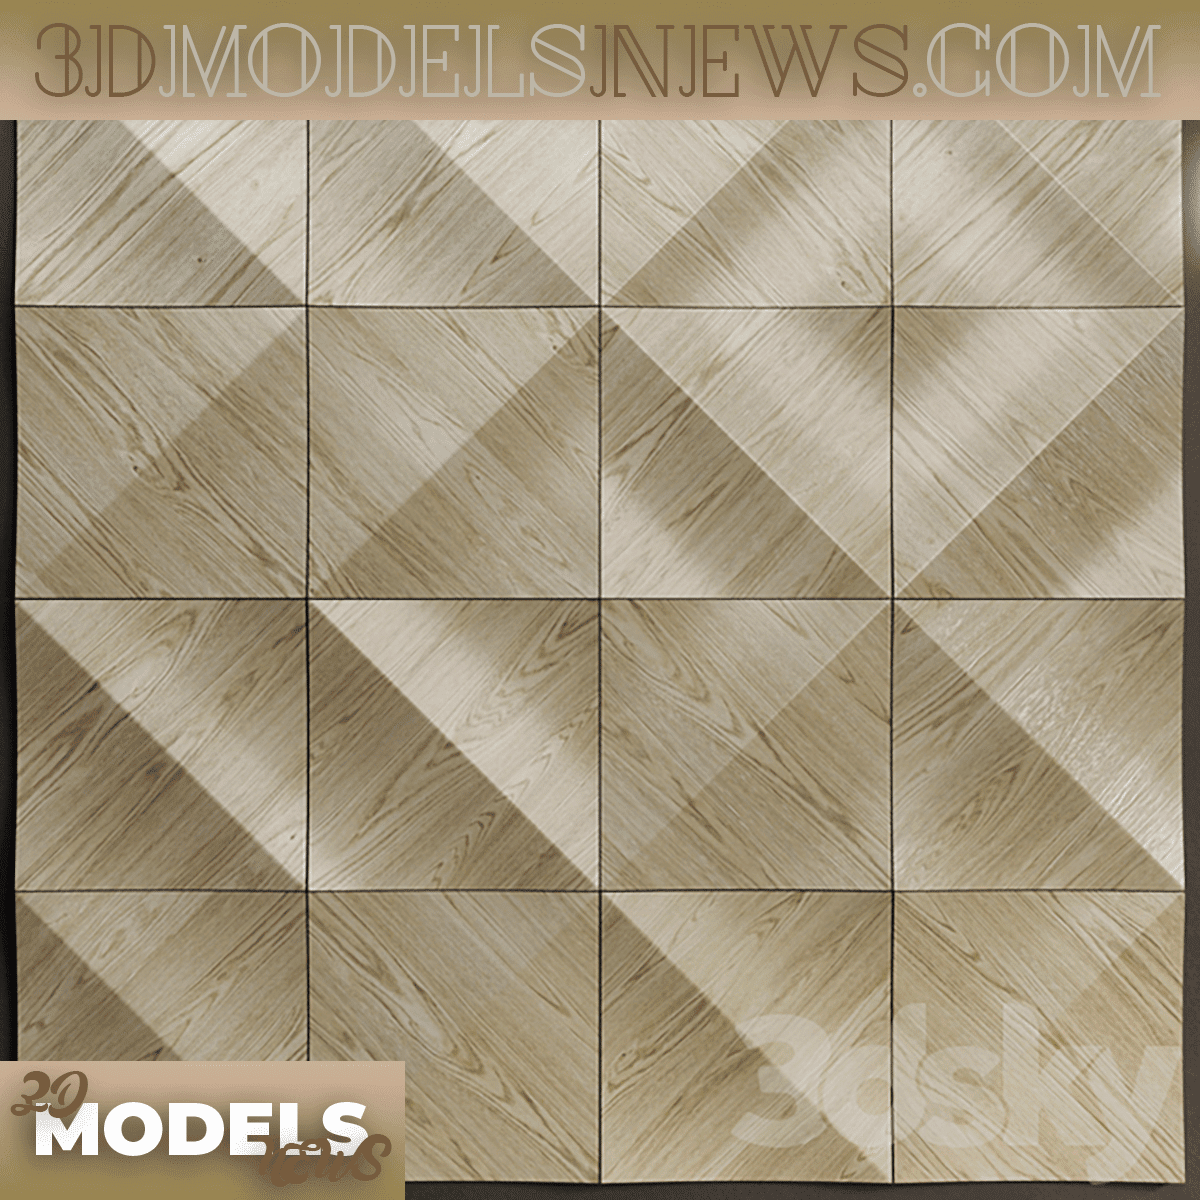 Wall Wood Panels Reef Model 1